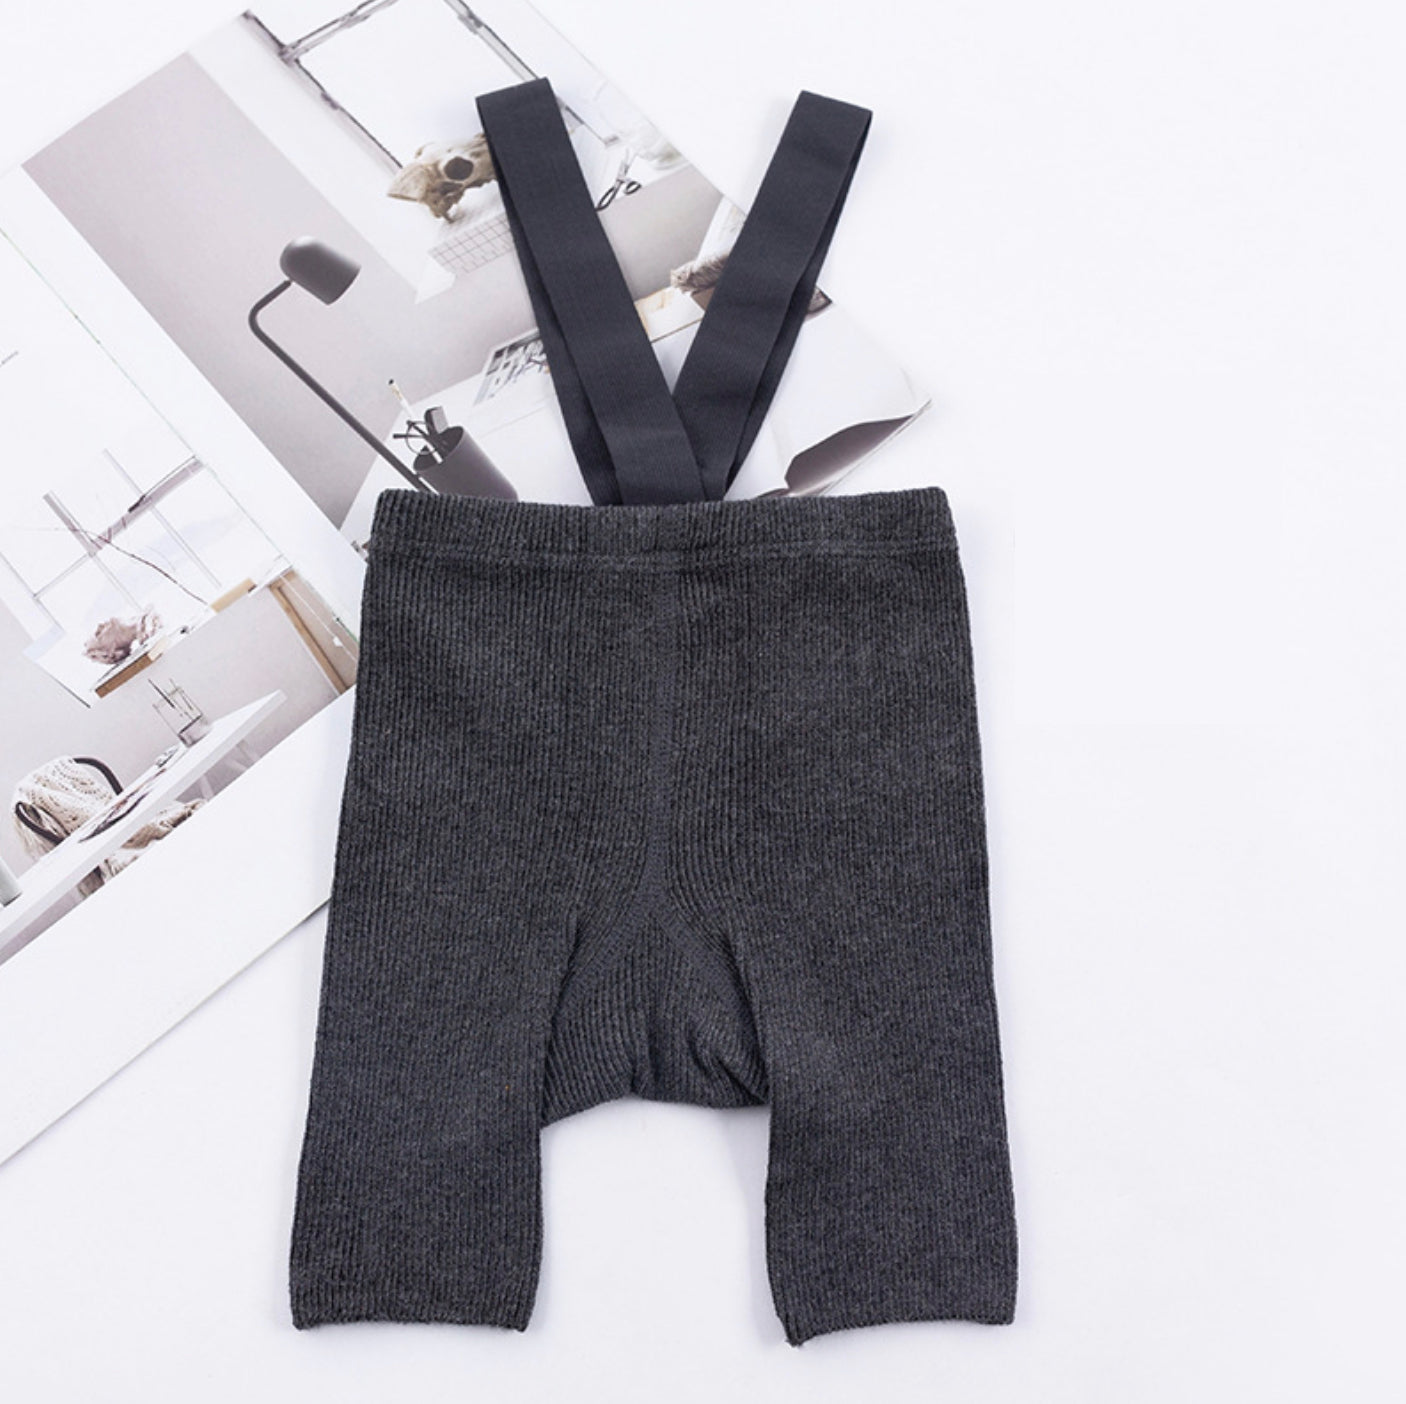 Unisex Ribbed Suspender Shorts - Dark Grey